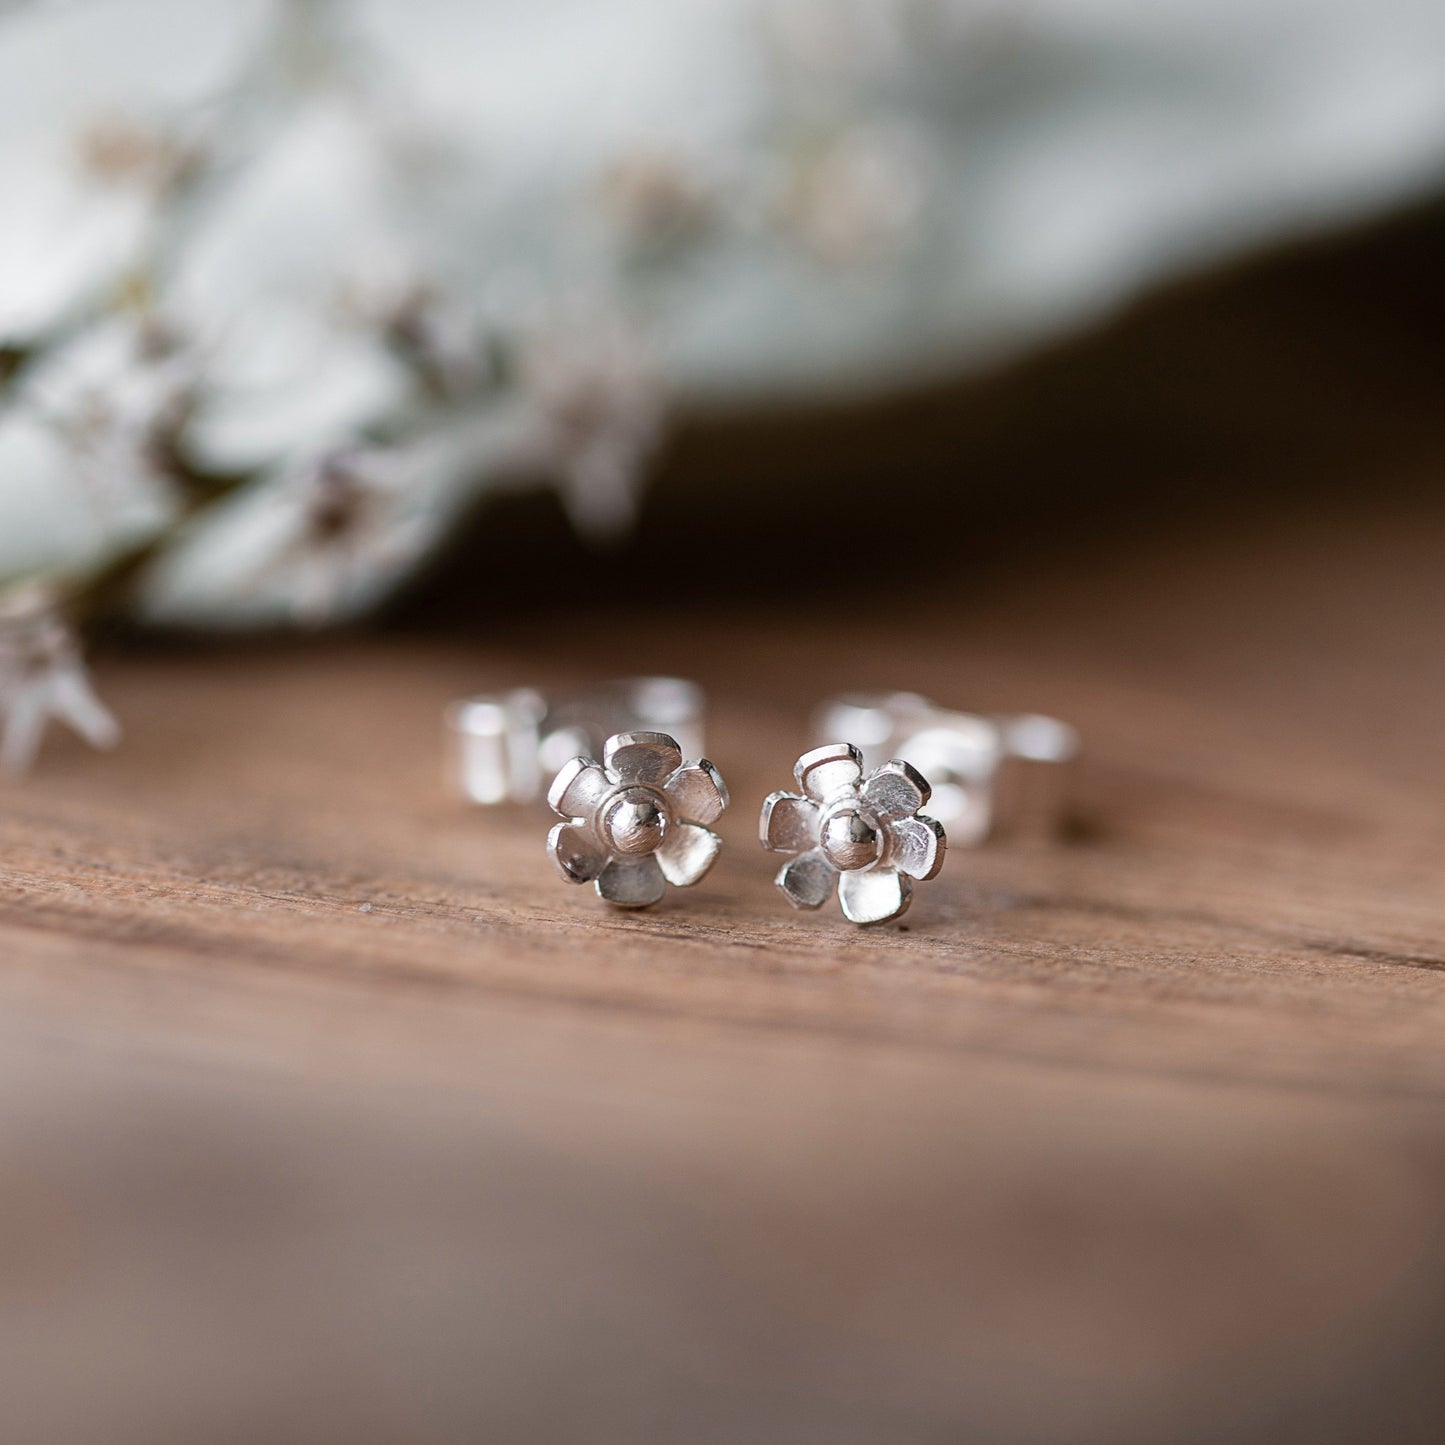 Tiny Silver Hawthorn Flower Studs Earrings Handmade by Anna Calvert Jewellery UK